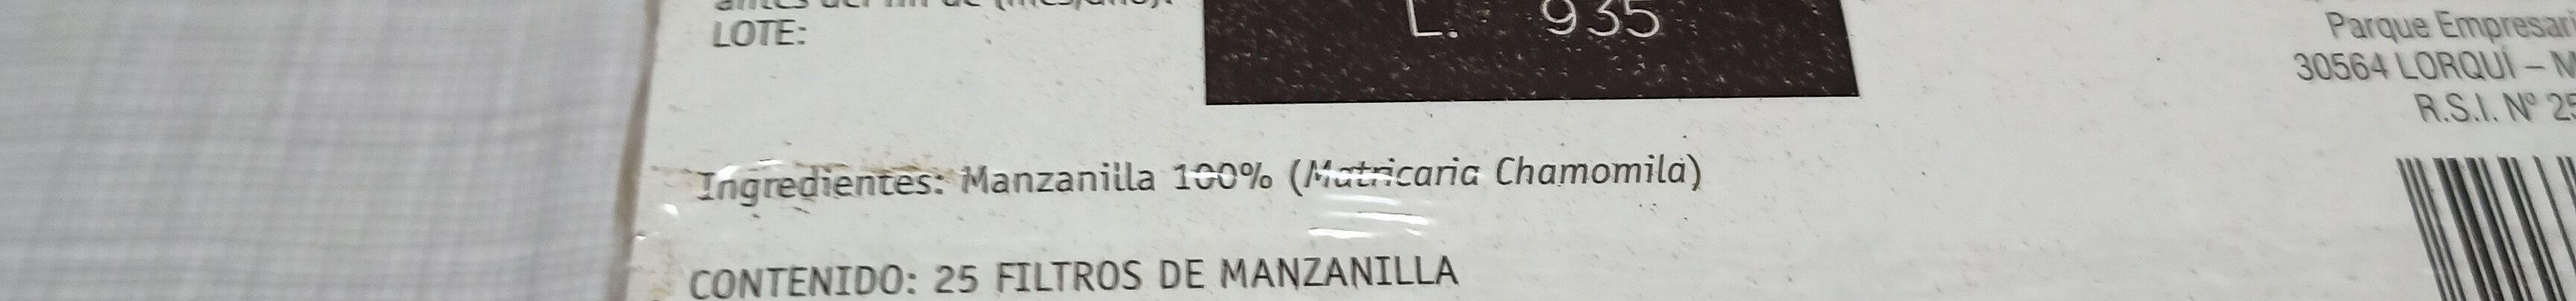 Mansaflor manzanilla - المكونات - fr